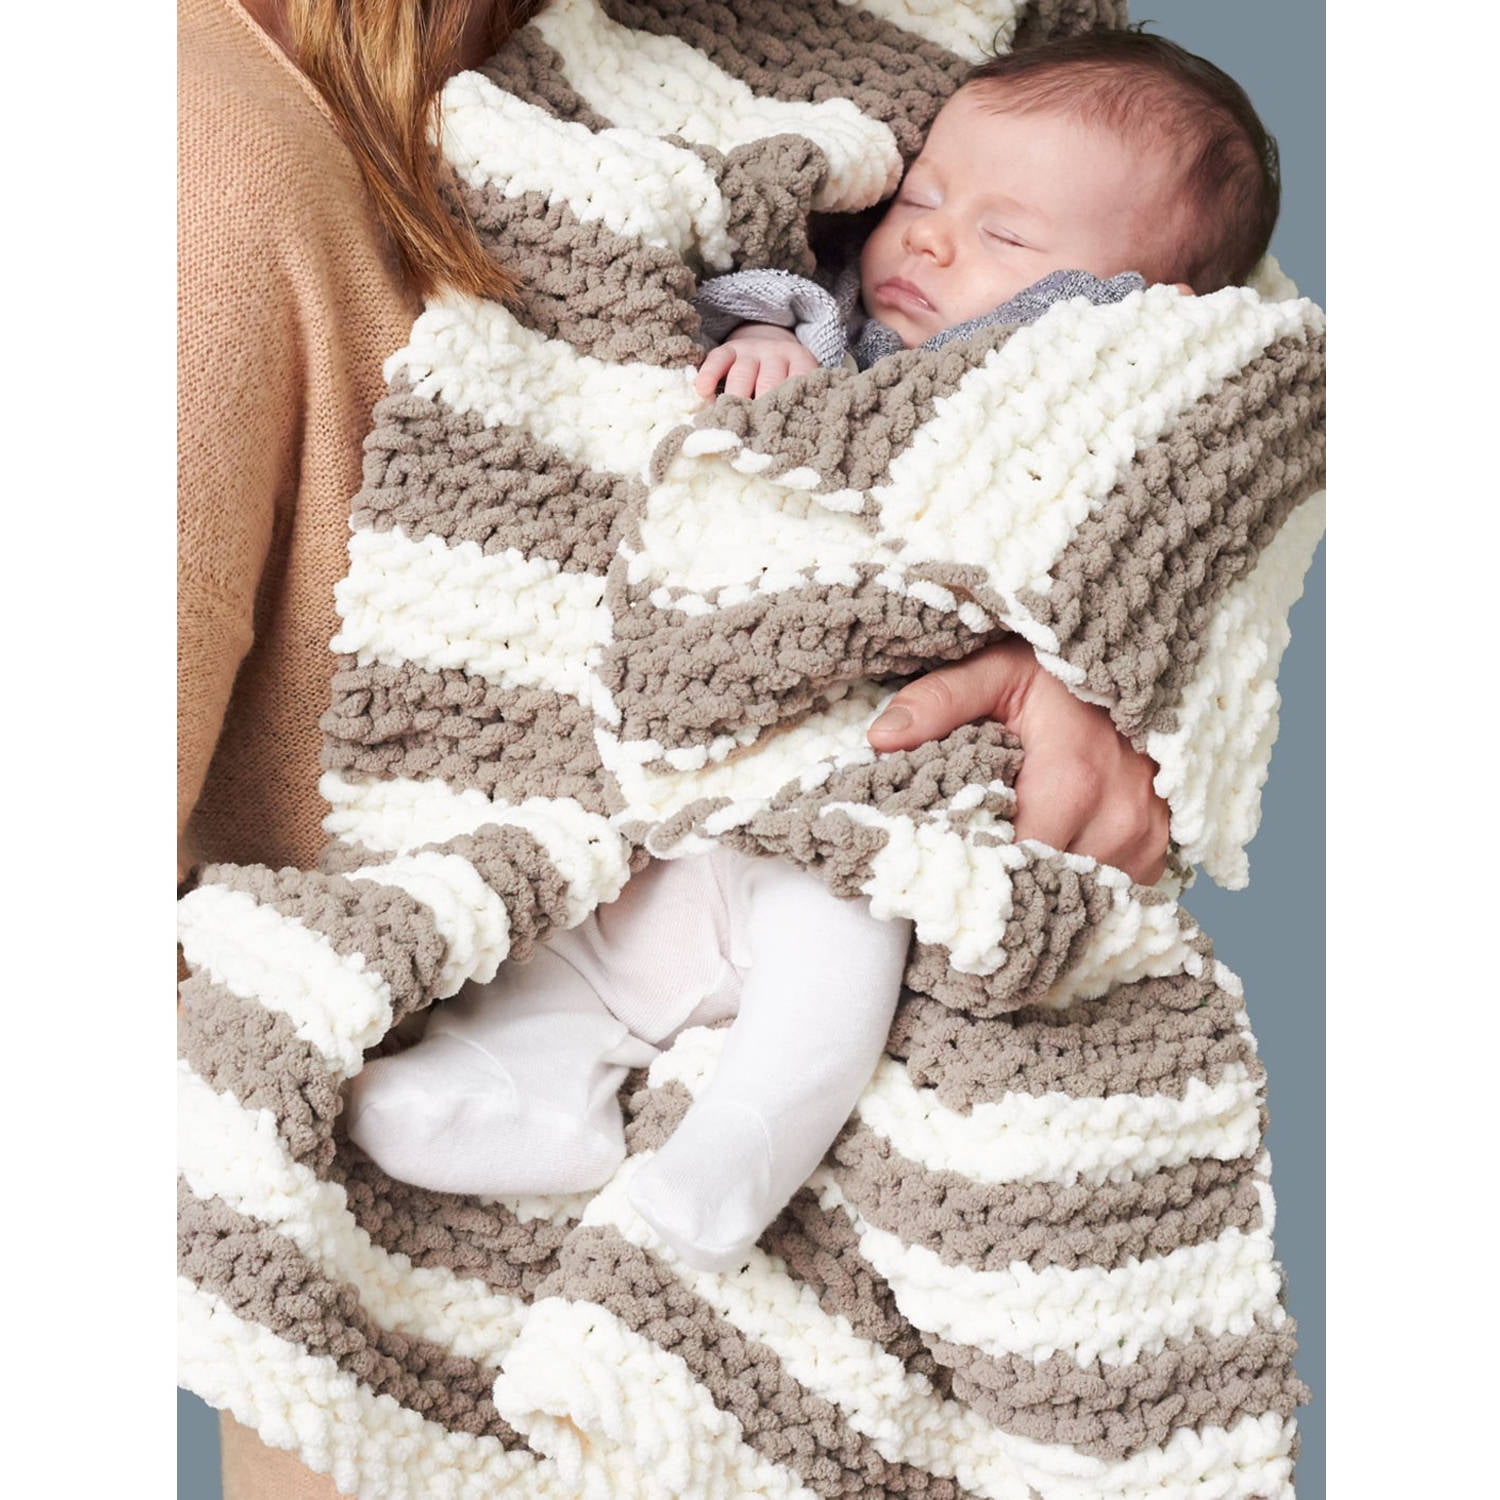 Where can you buy Bernat Baby Blanket yarn?